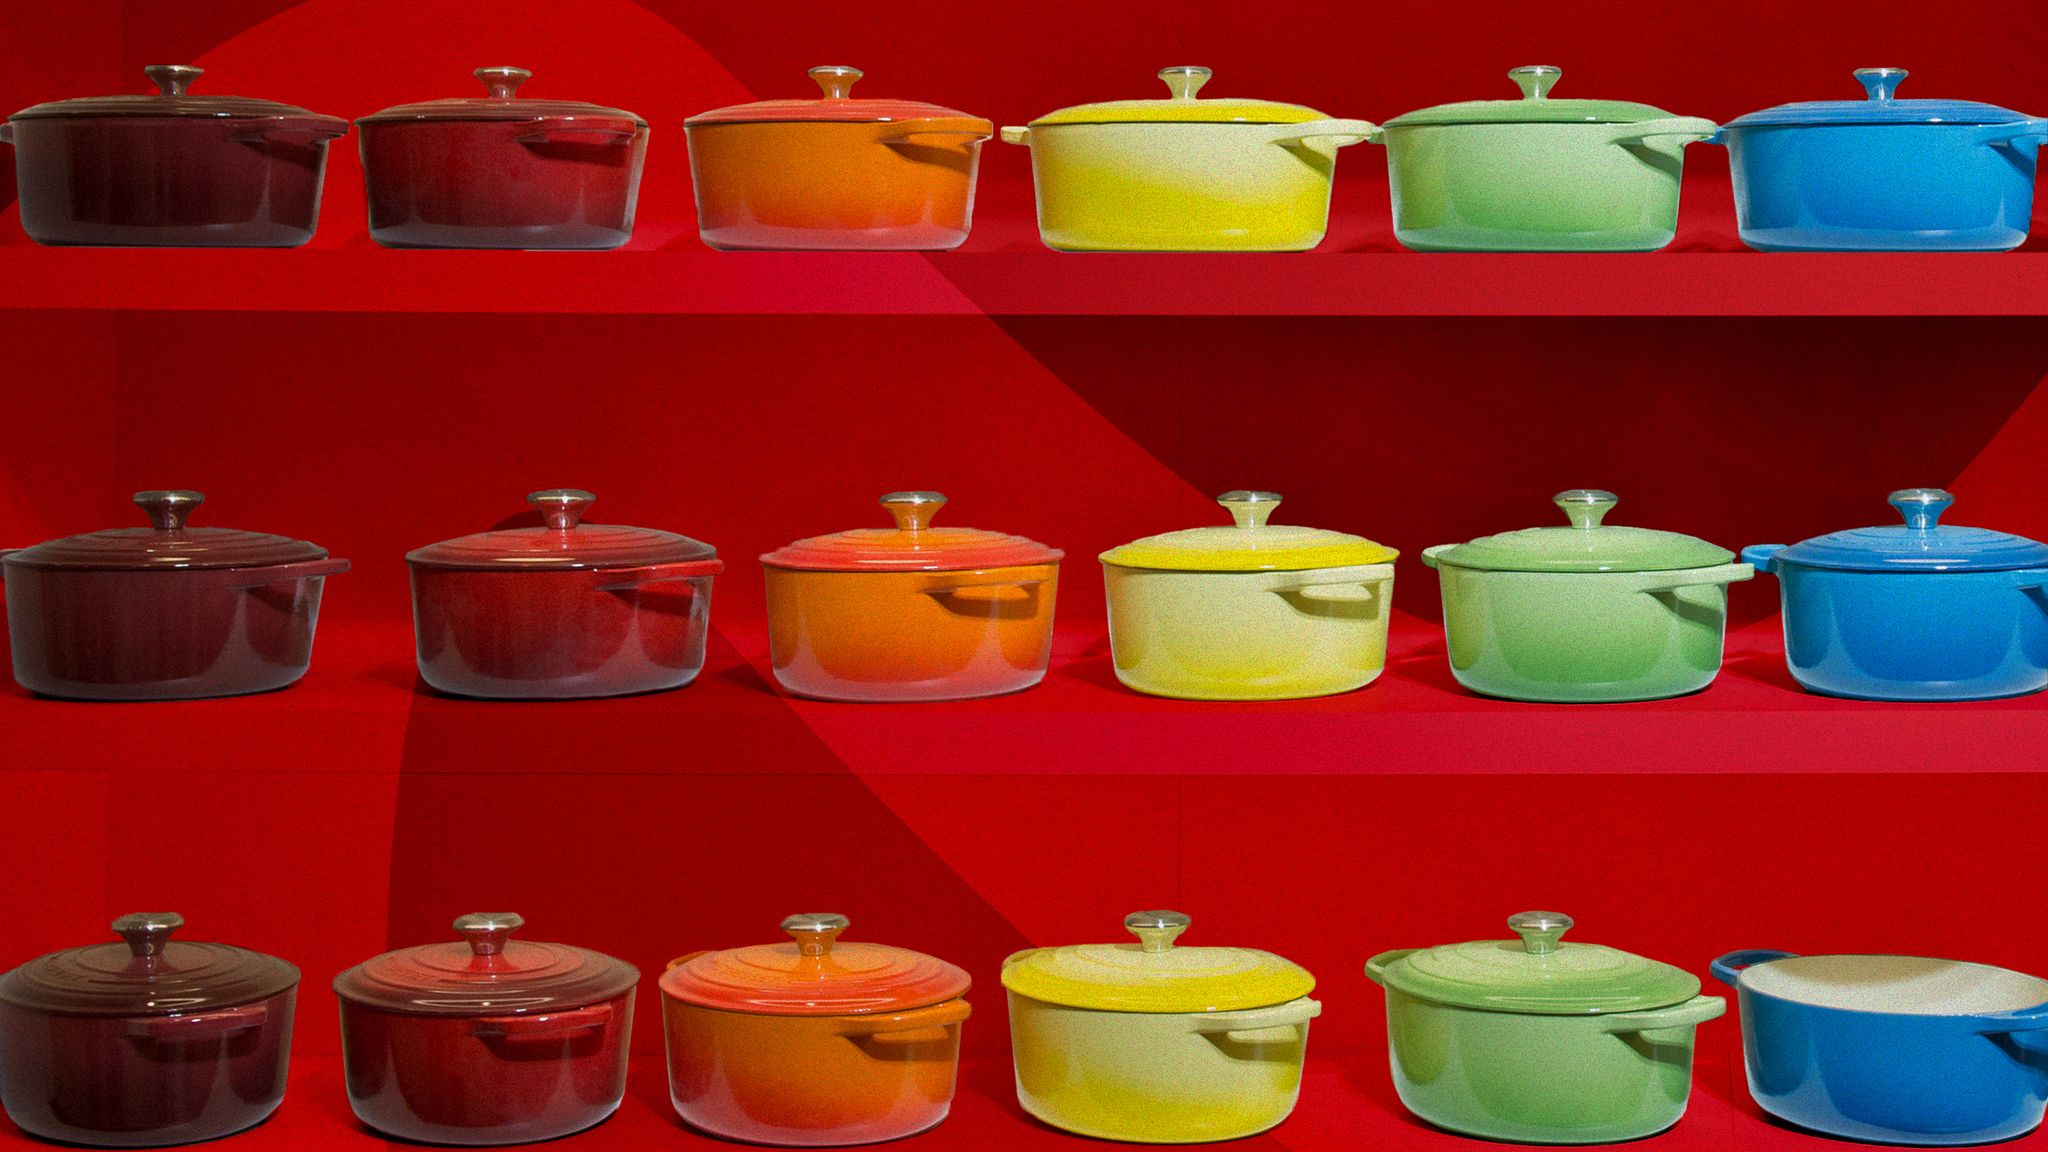 shelves of le creuset cookware